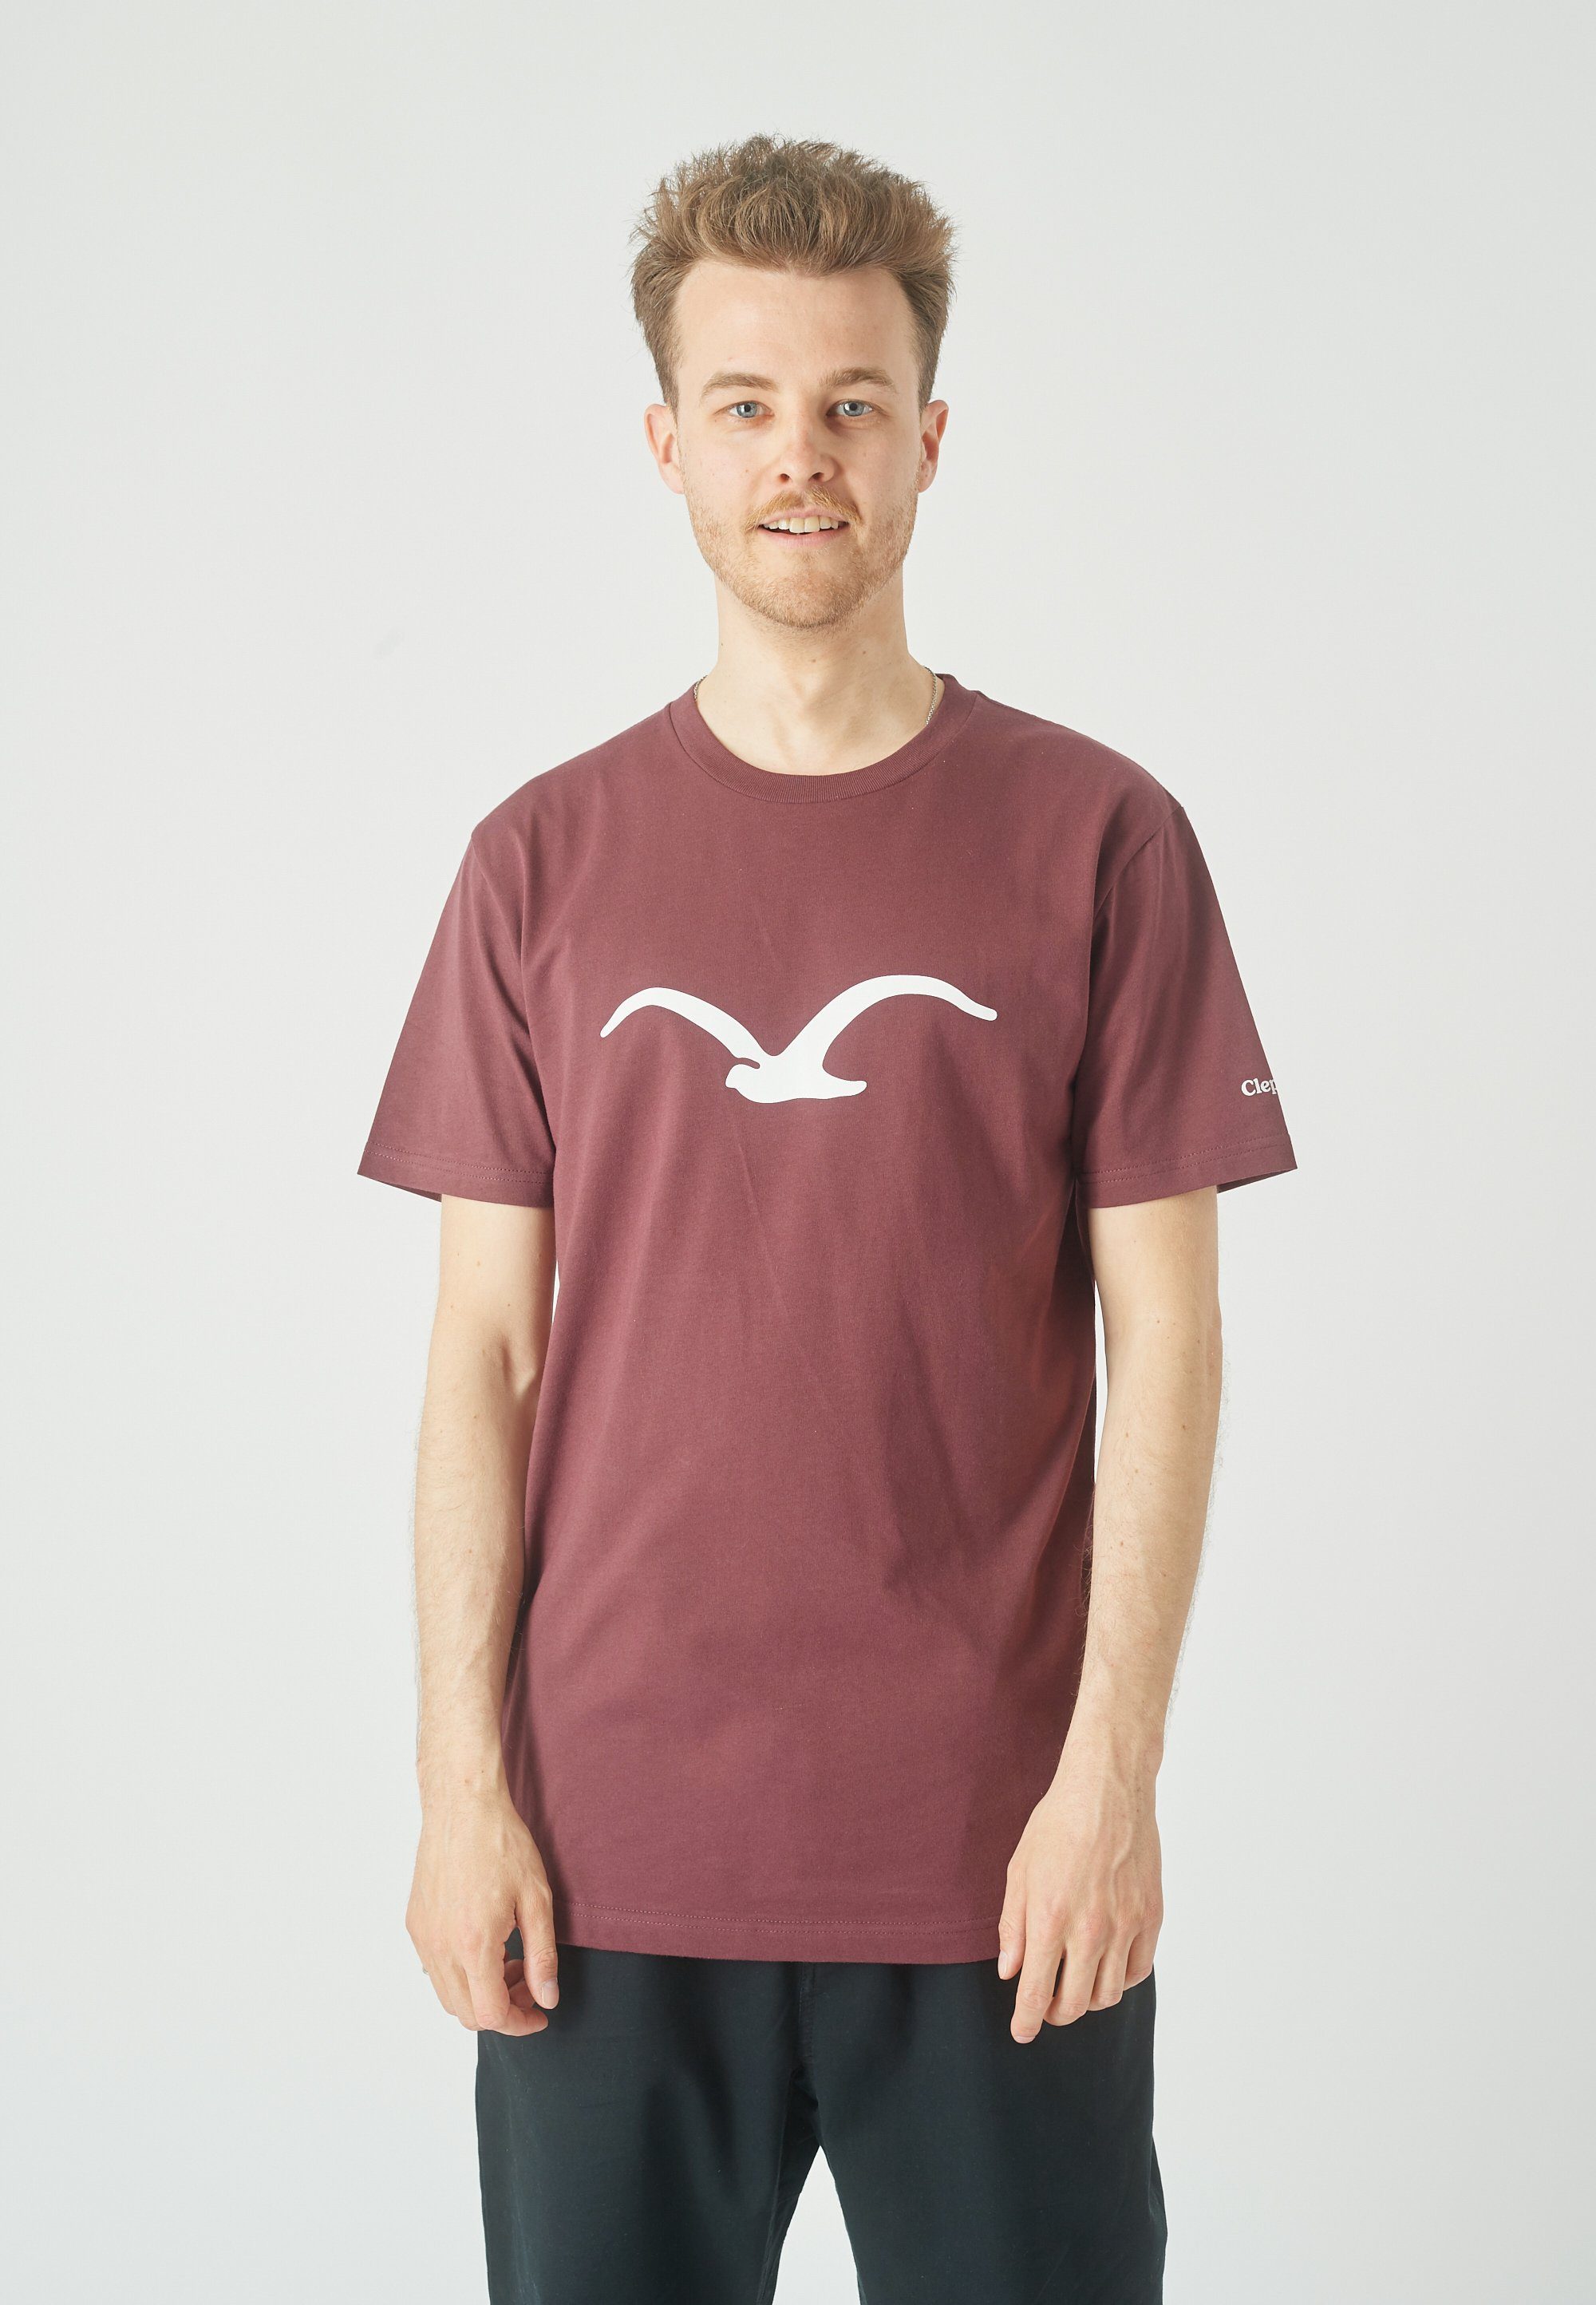 Cleptomanicx T-Shirt Mowe mit klassischem Print dunkelbraun-weiß